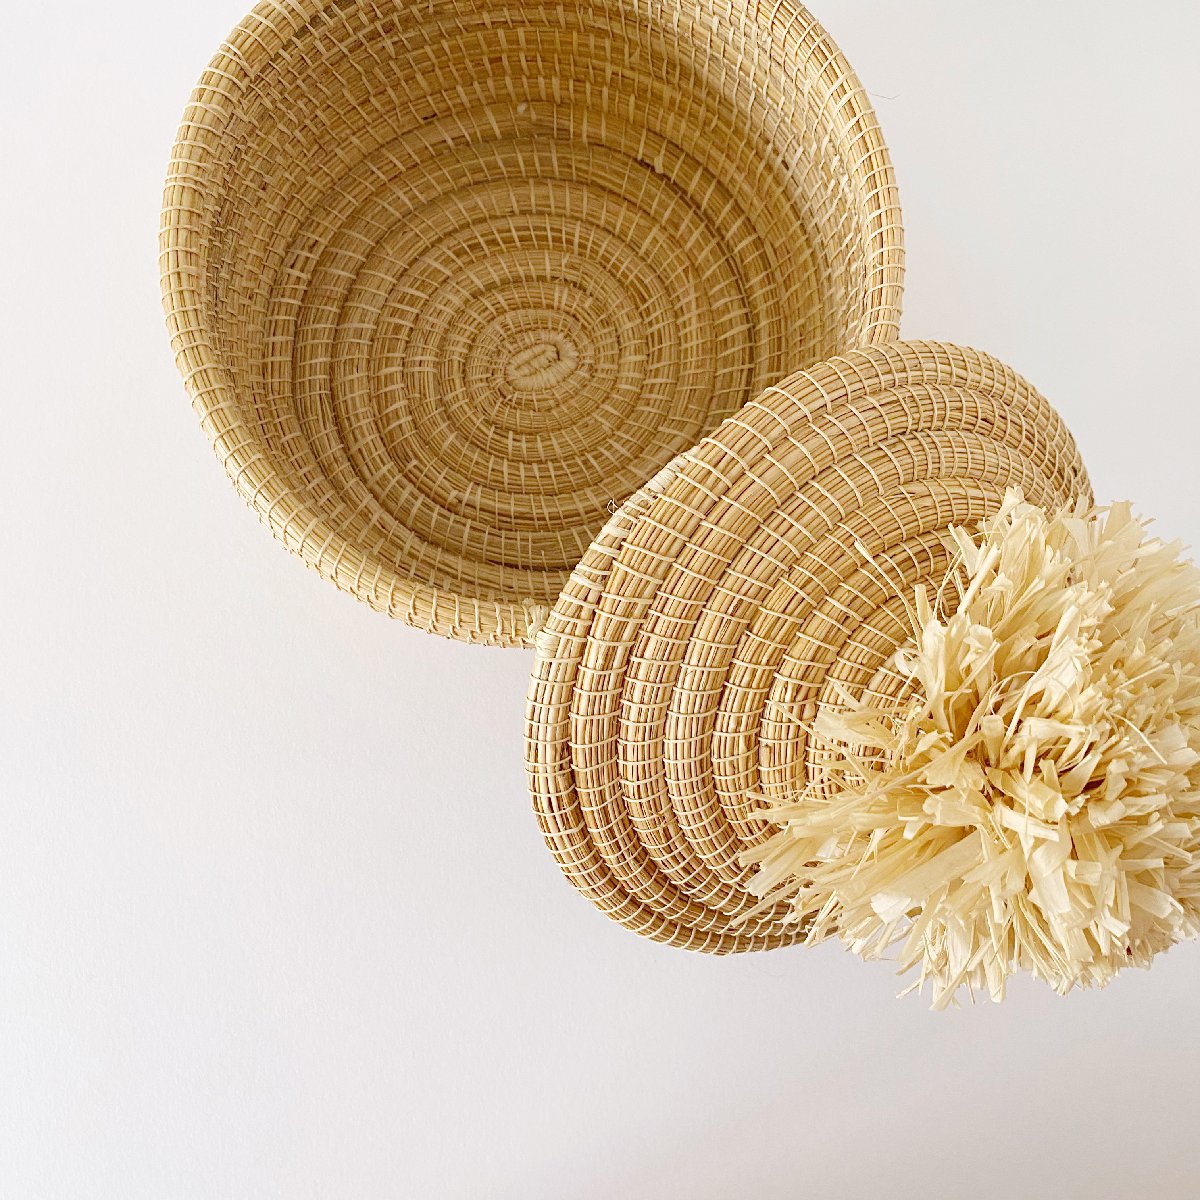 African woven pom pom lidded basket | natural #1 - open